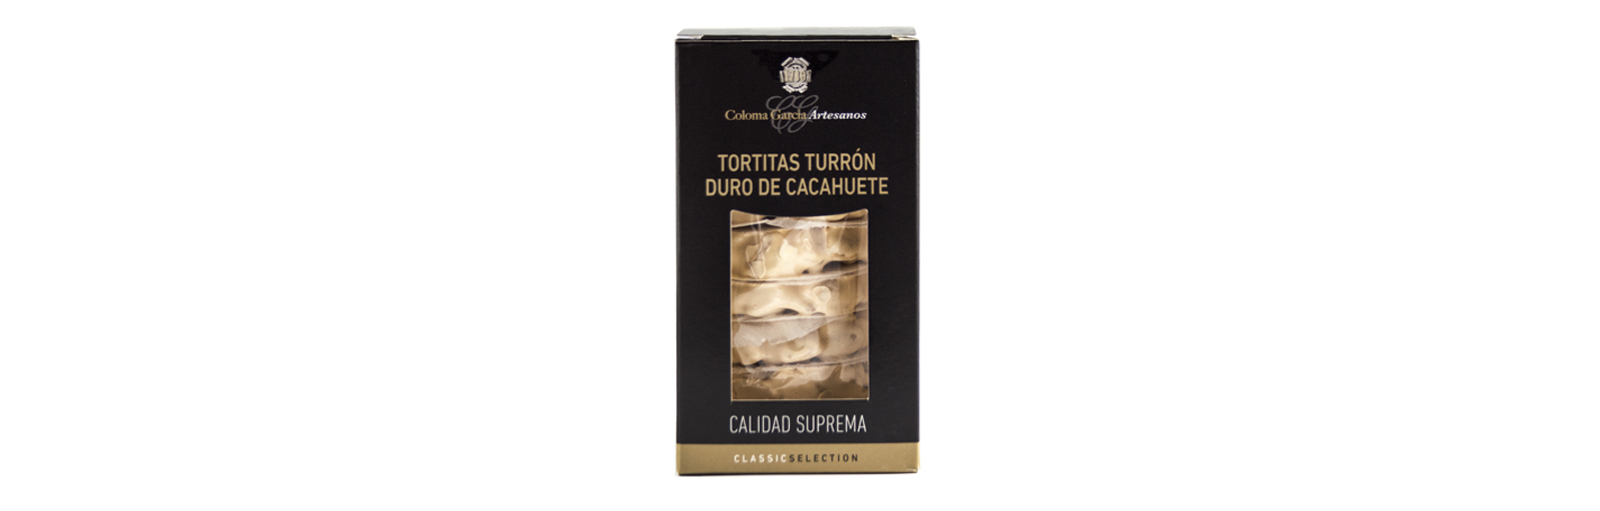 TORTITAS TURRÓN DURO DE CACAHUETES